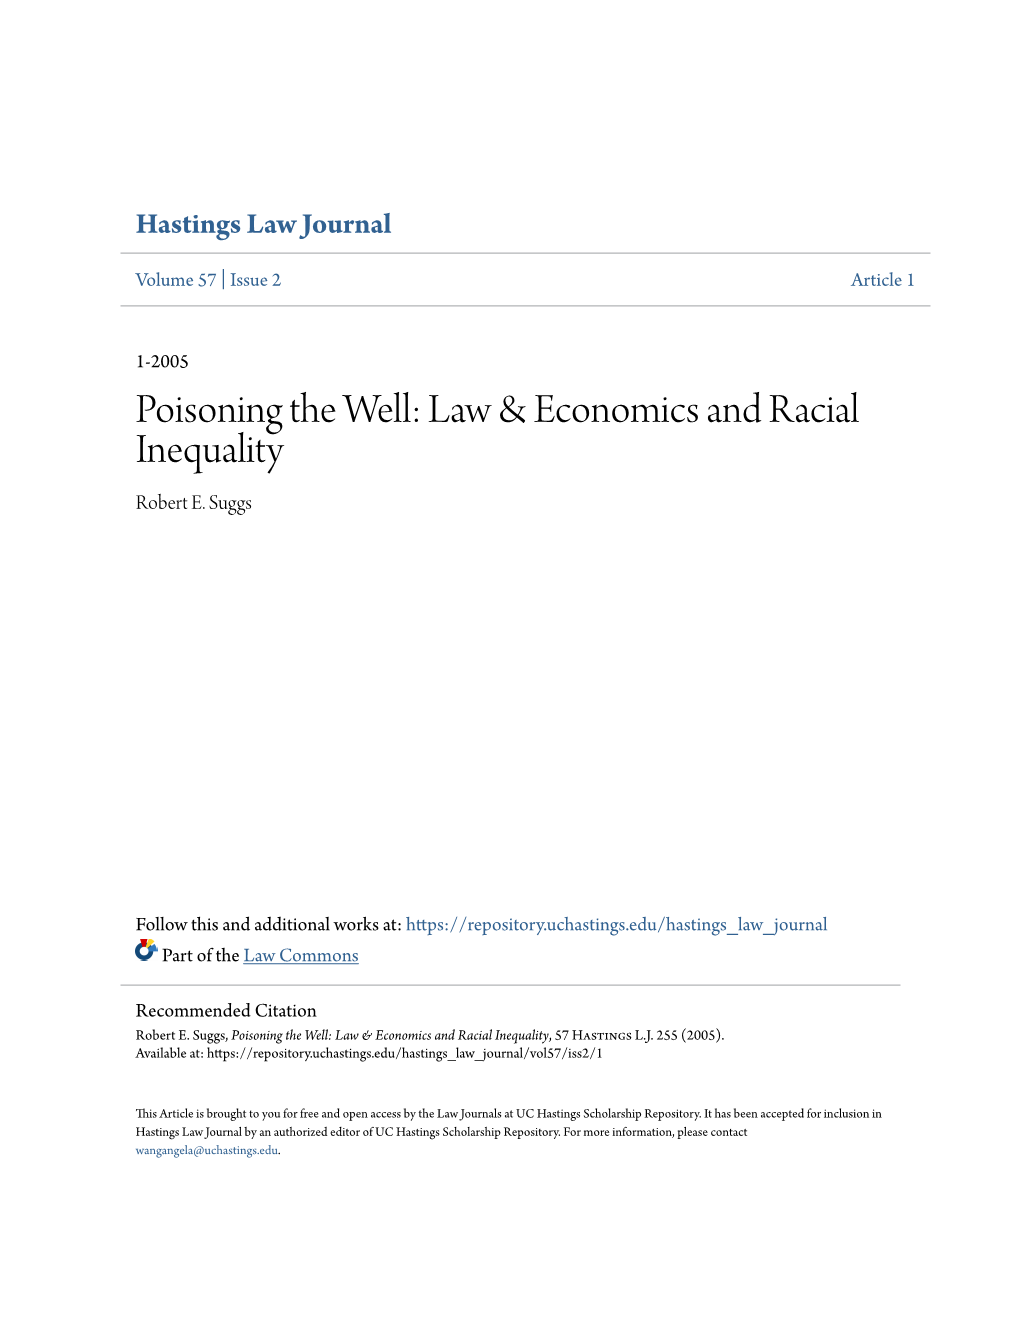 Law & Economics and Racial Inequality